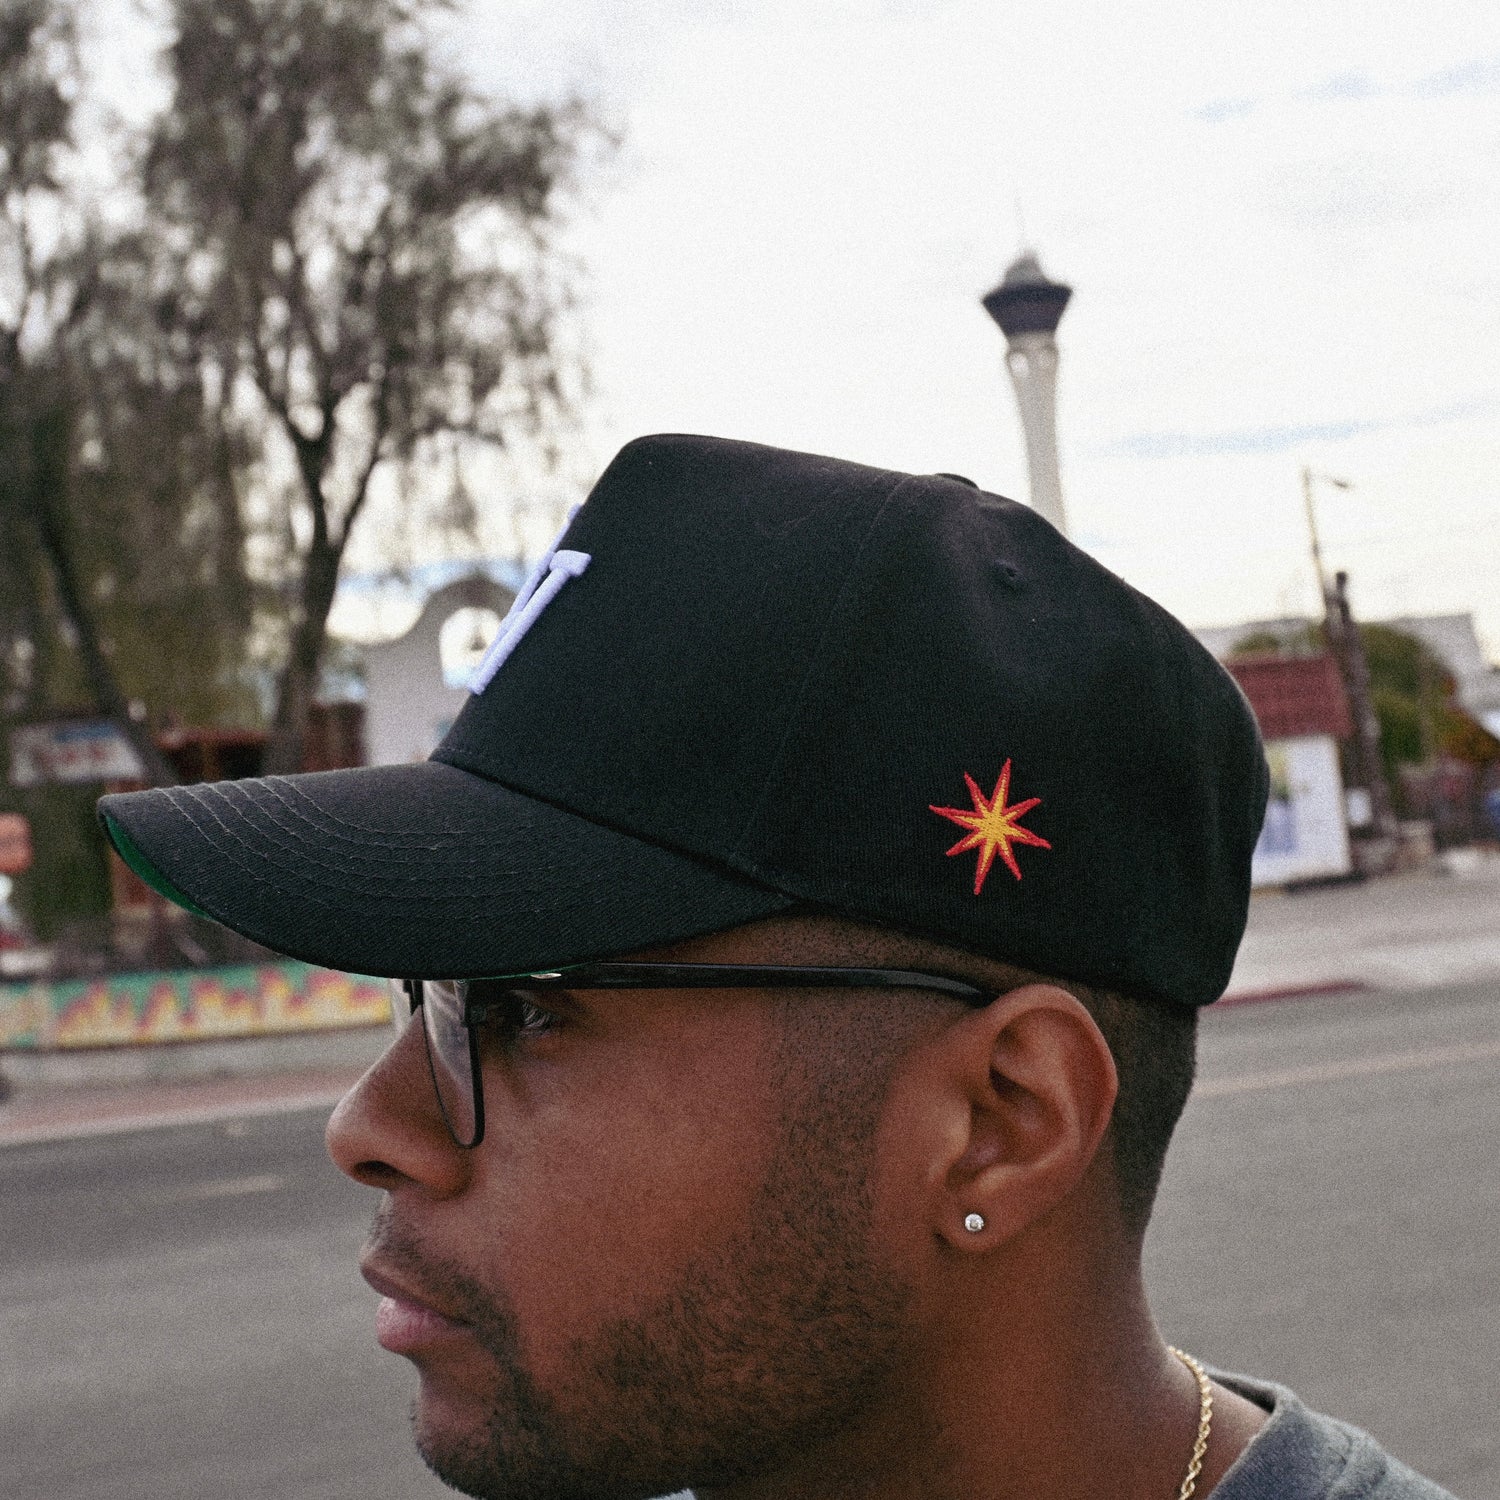 Las Vegas Stars Snapback Hat - Black/White